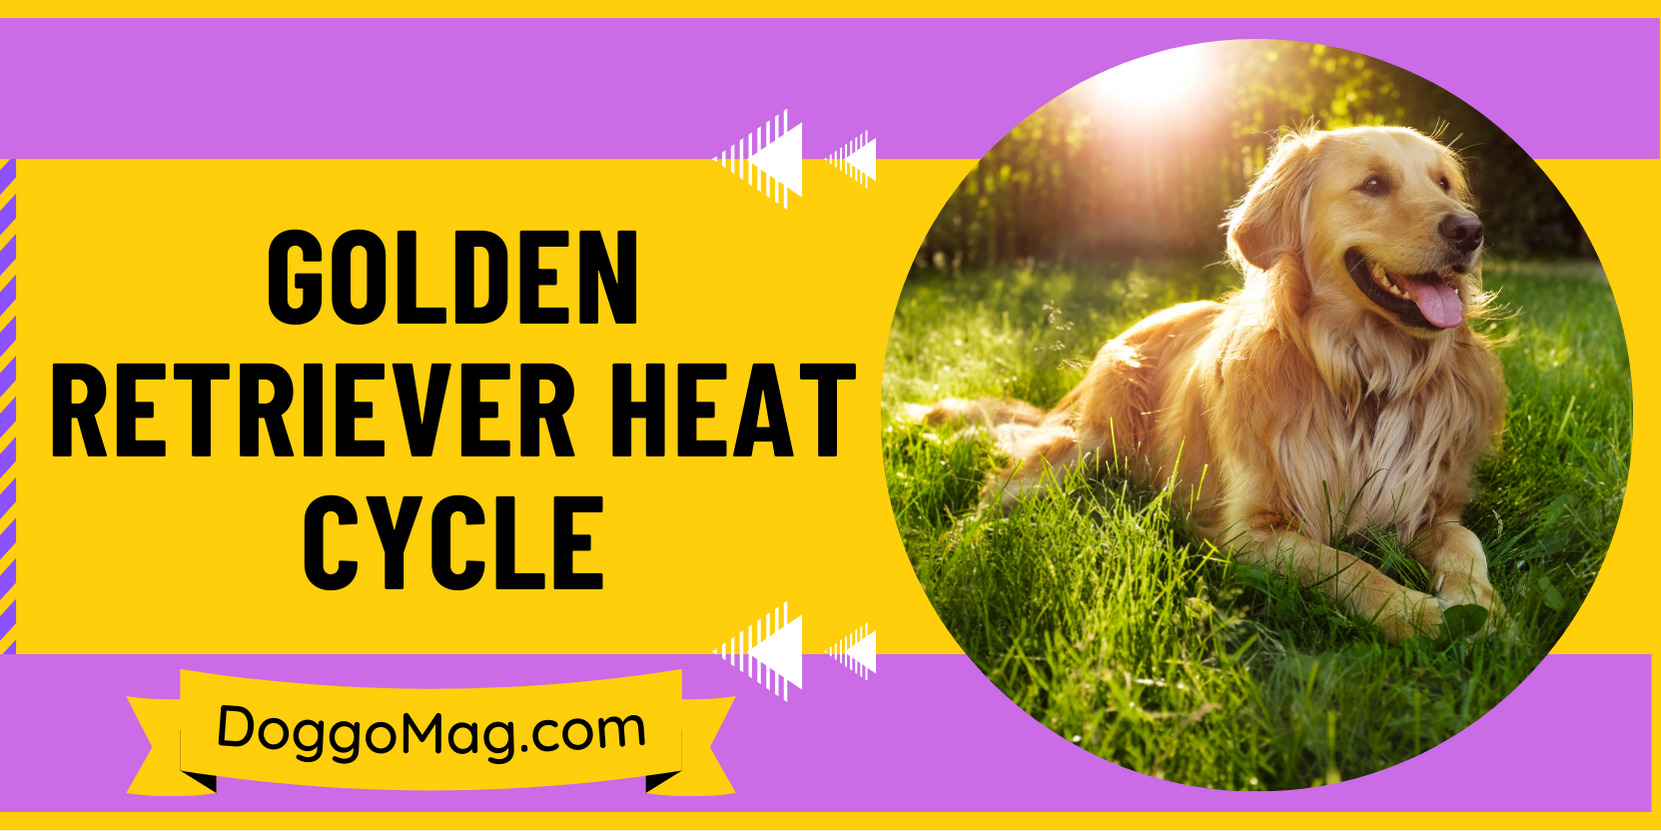 Golden Retriever Heat Cycle